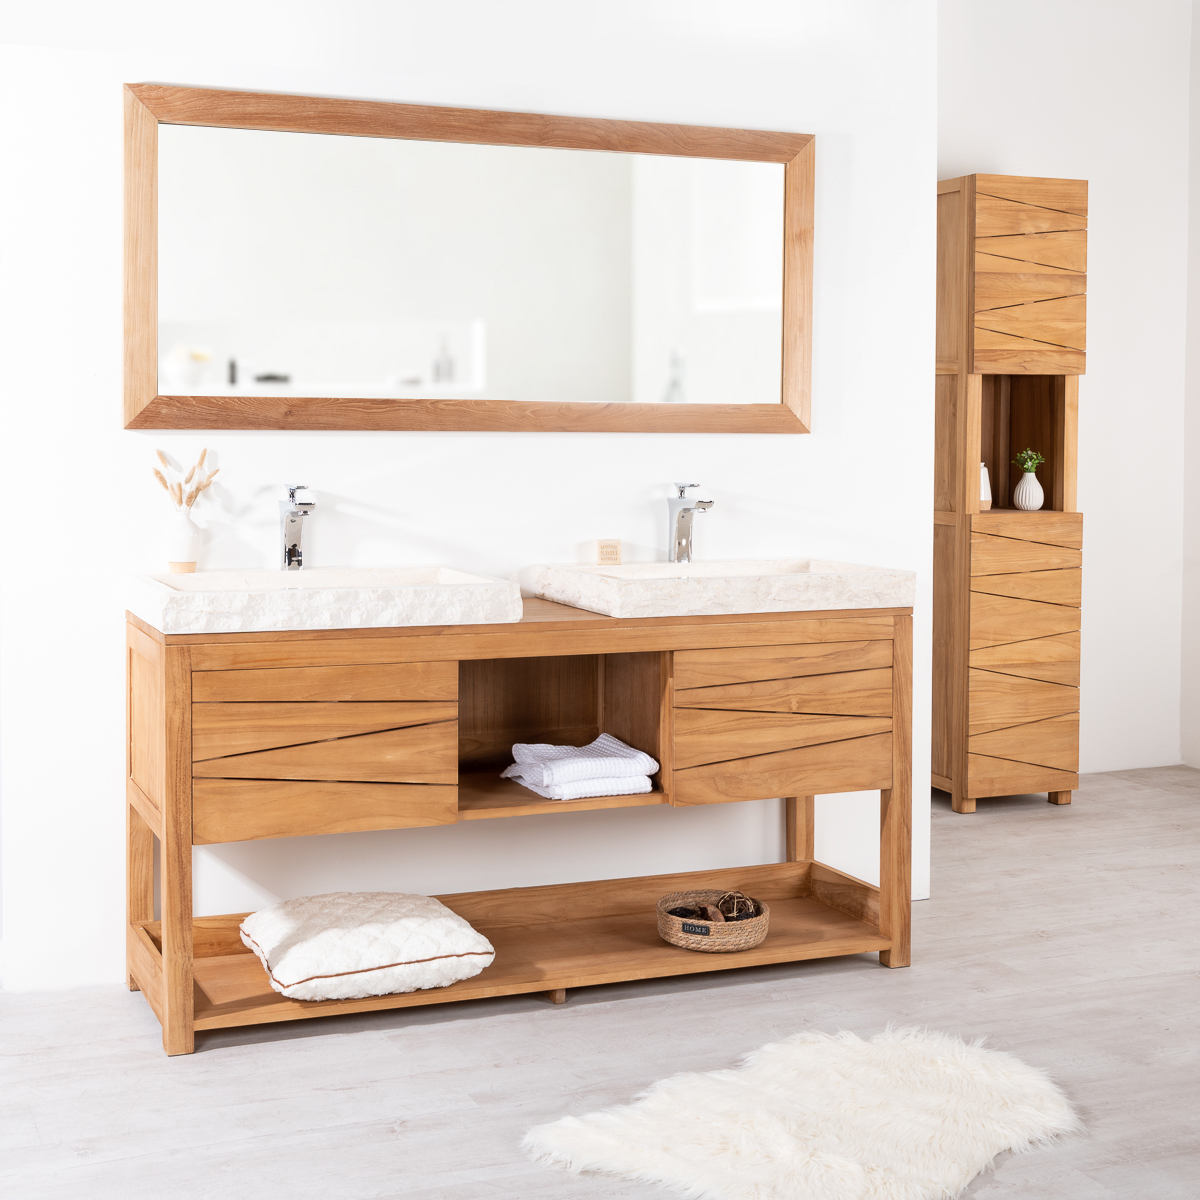 Double Sink 2 Marble Sinks Cosy, Solid Wood Double Bathroom Vanity Units